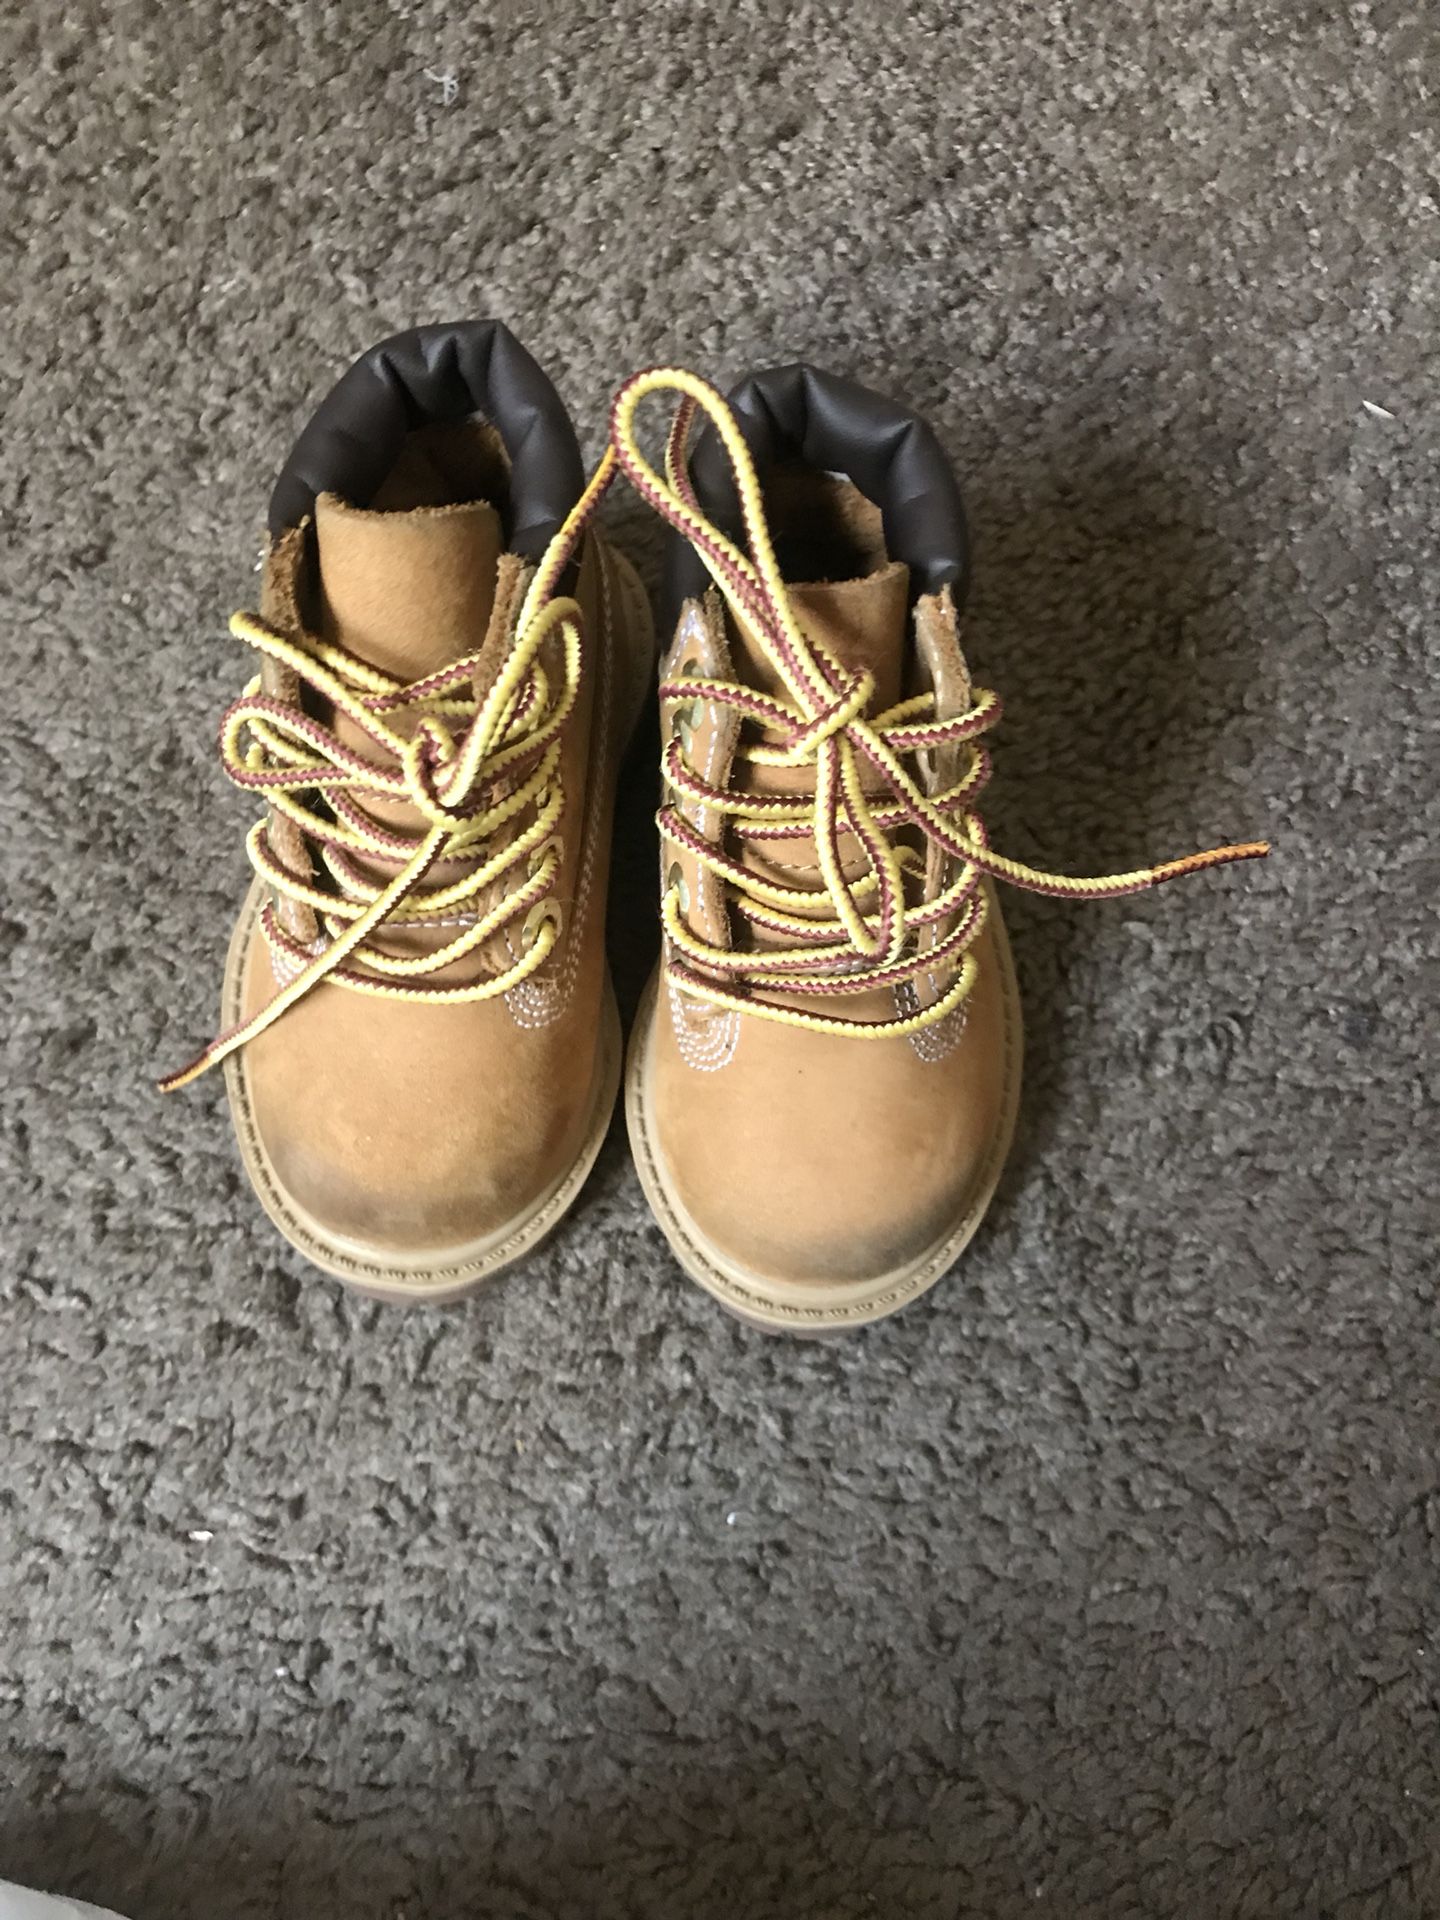 Timberland boots size 4